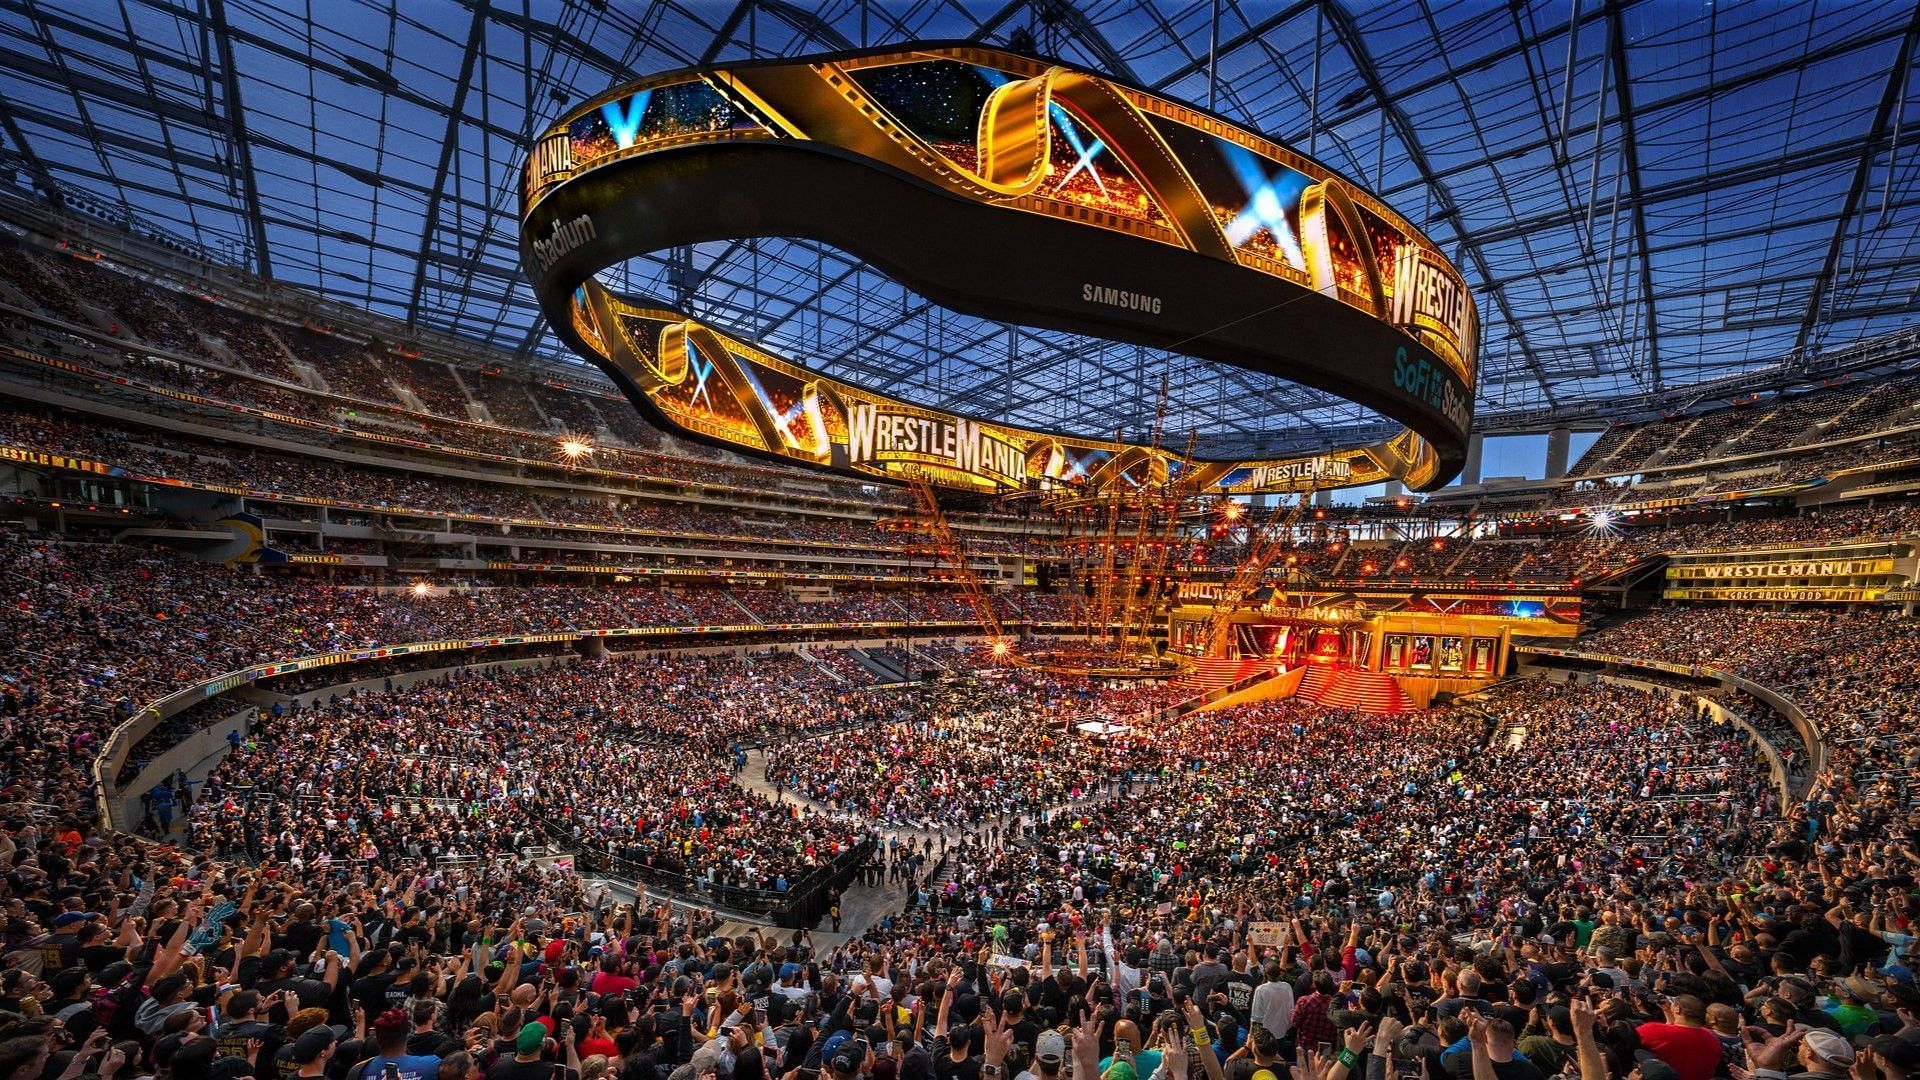 The WWE Universe packs So-Fi Stadium for WrestleMania 39